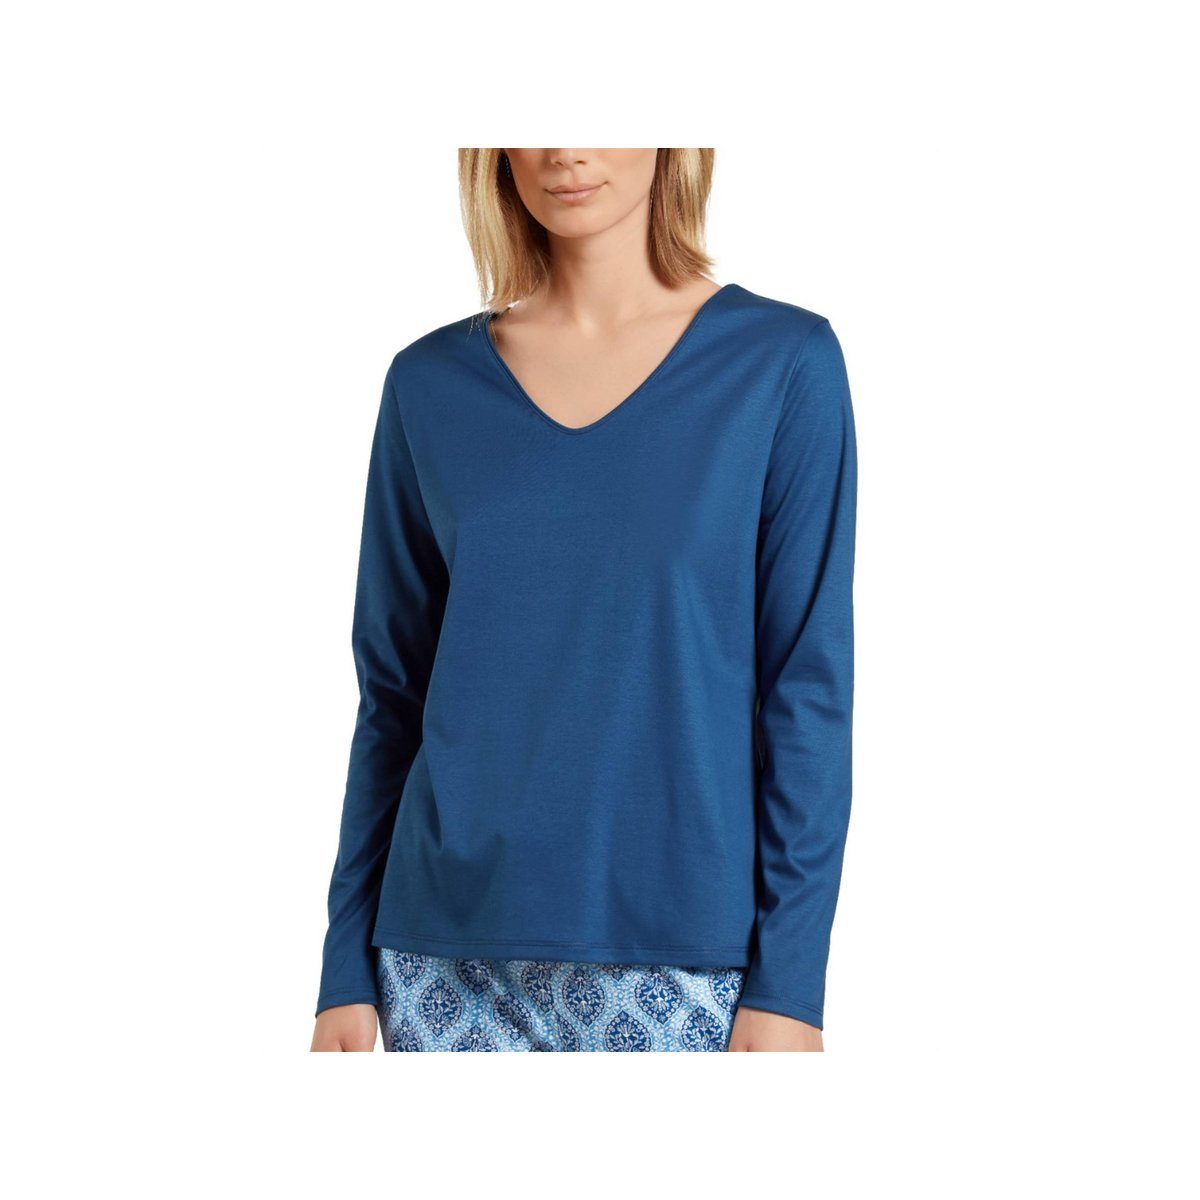 Verkaufsberater CALIDA Schlafanzug blau lapis blue